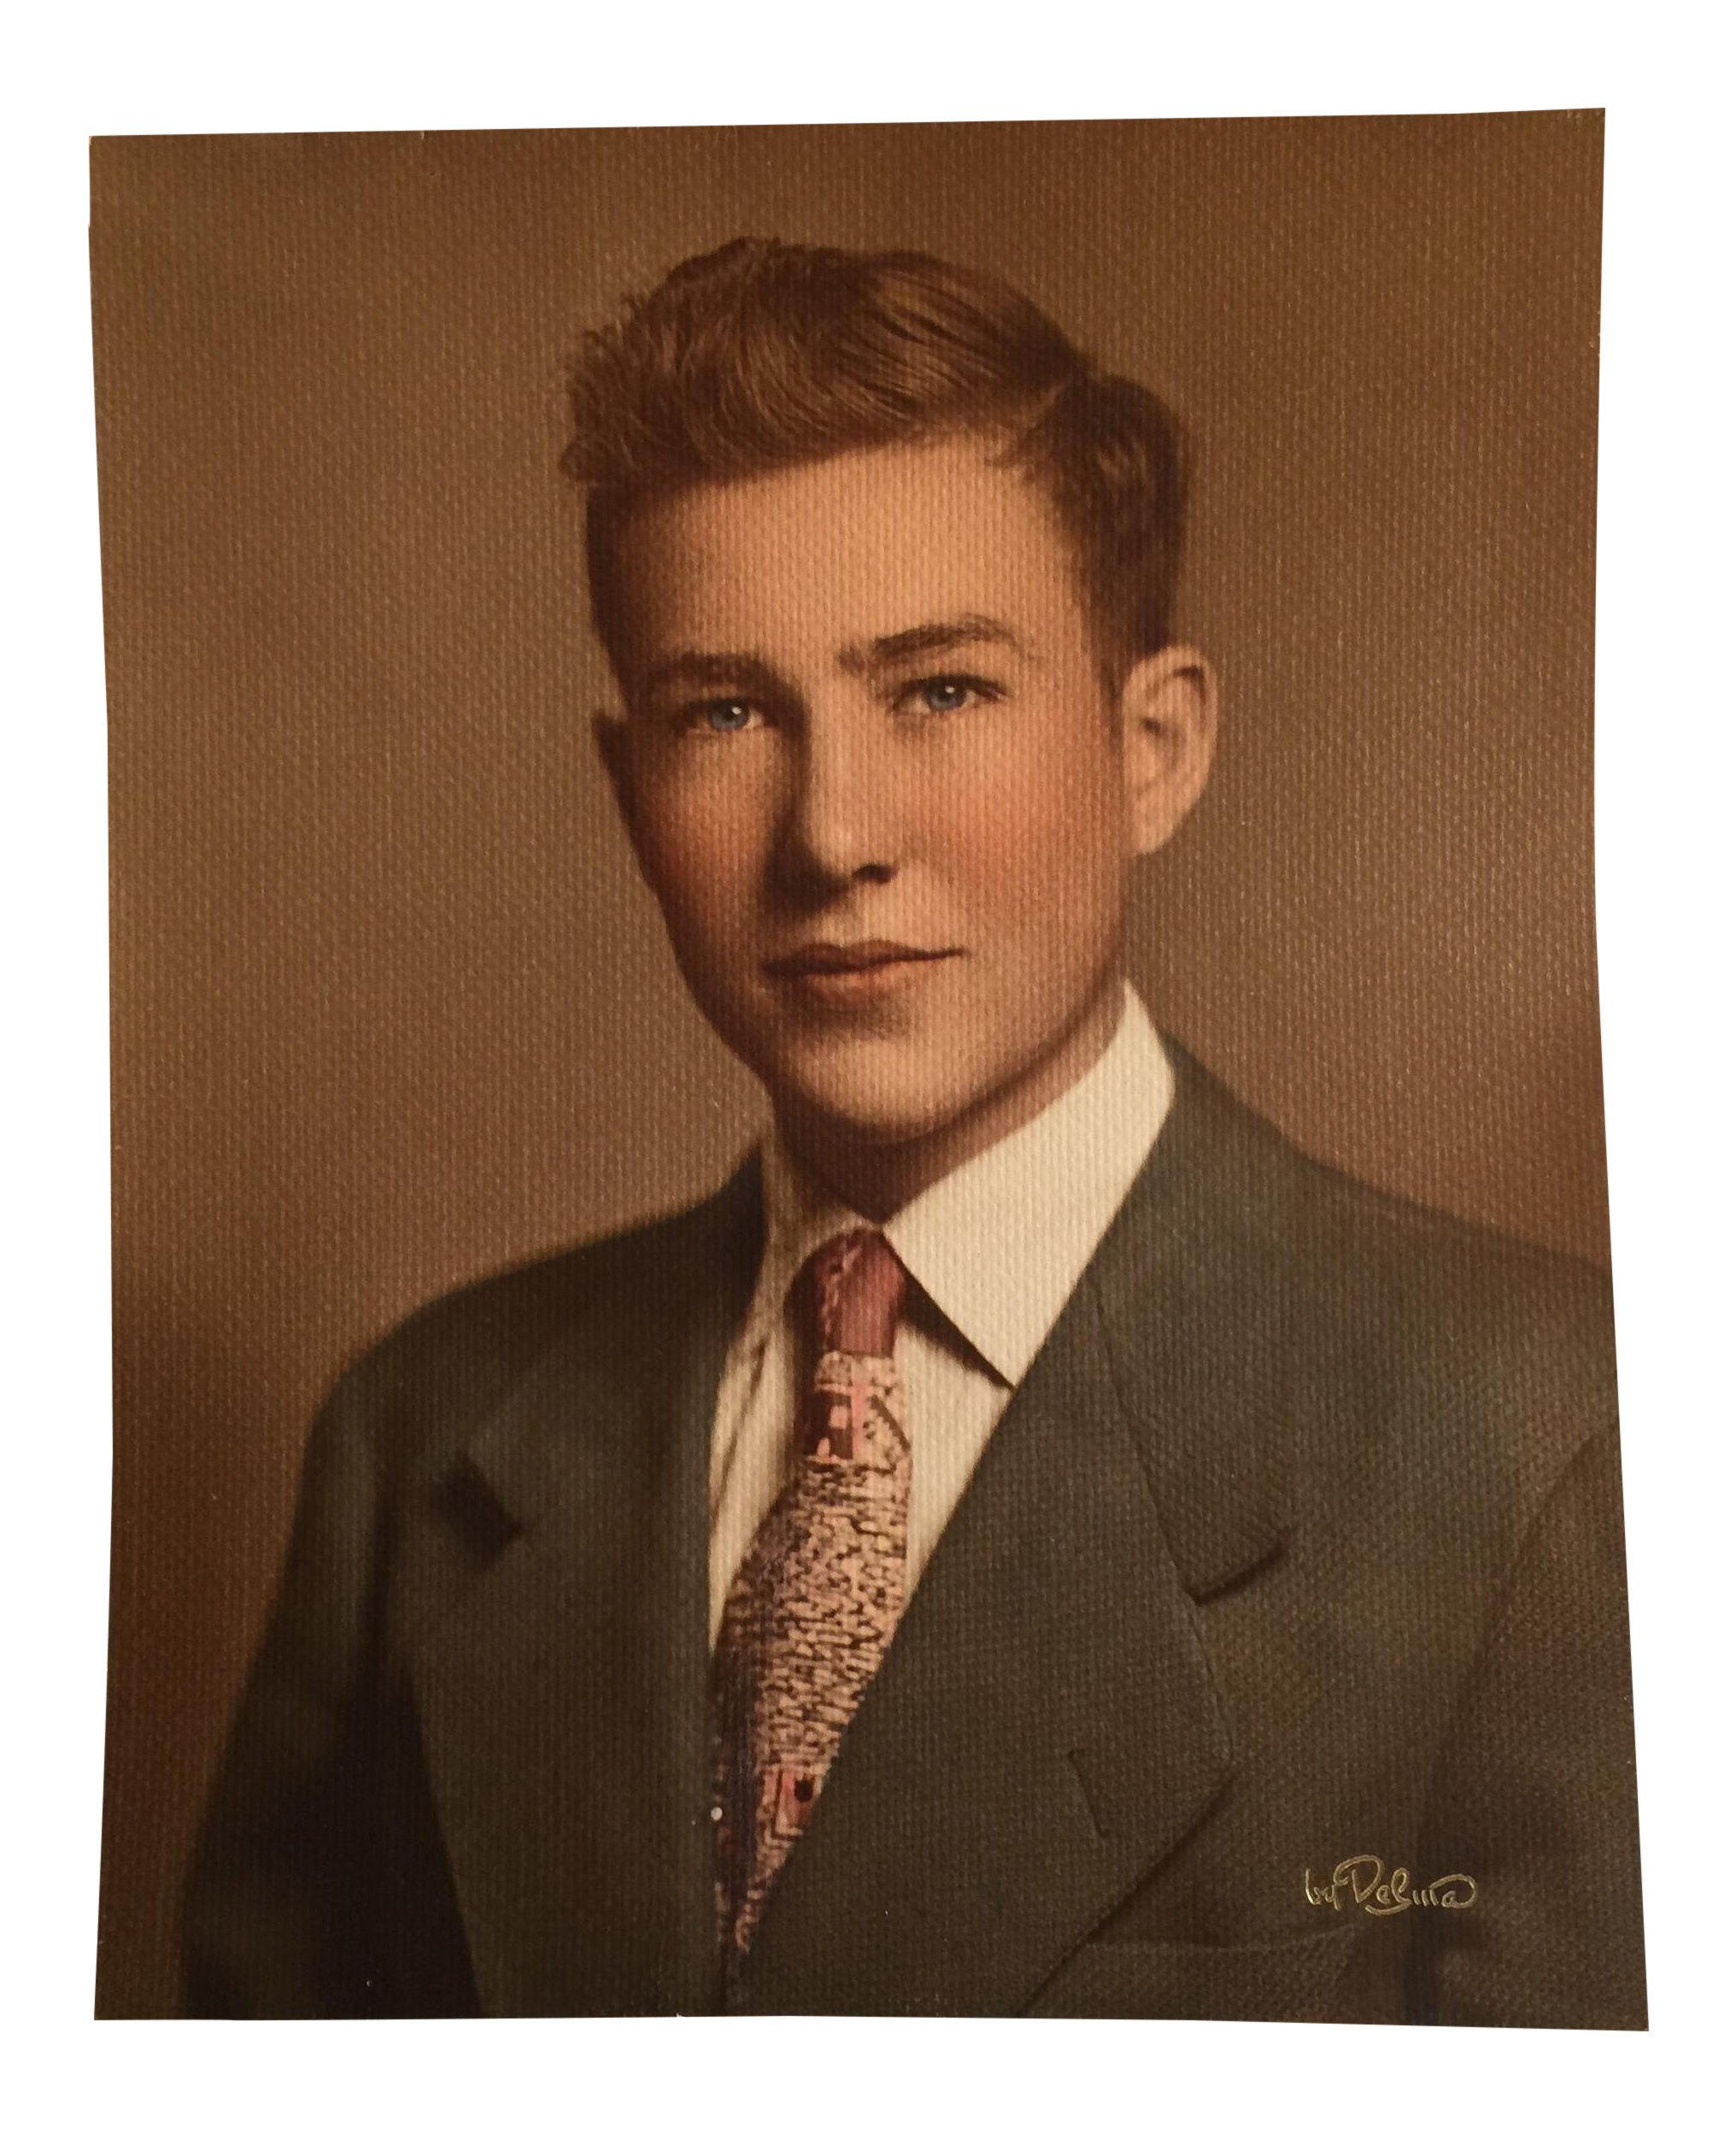 1950 Young Man Graduation Photo Portrait | Chairish